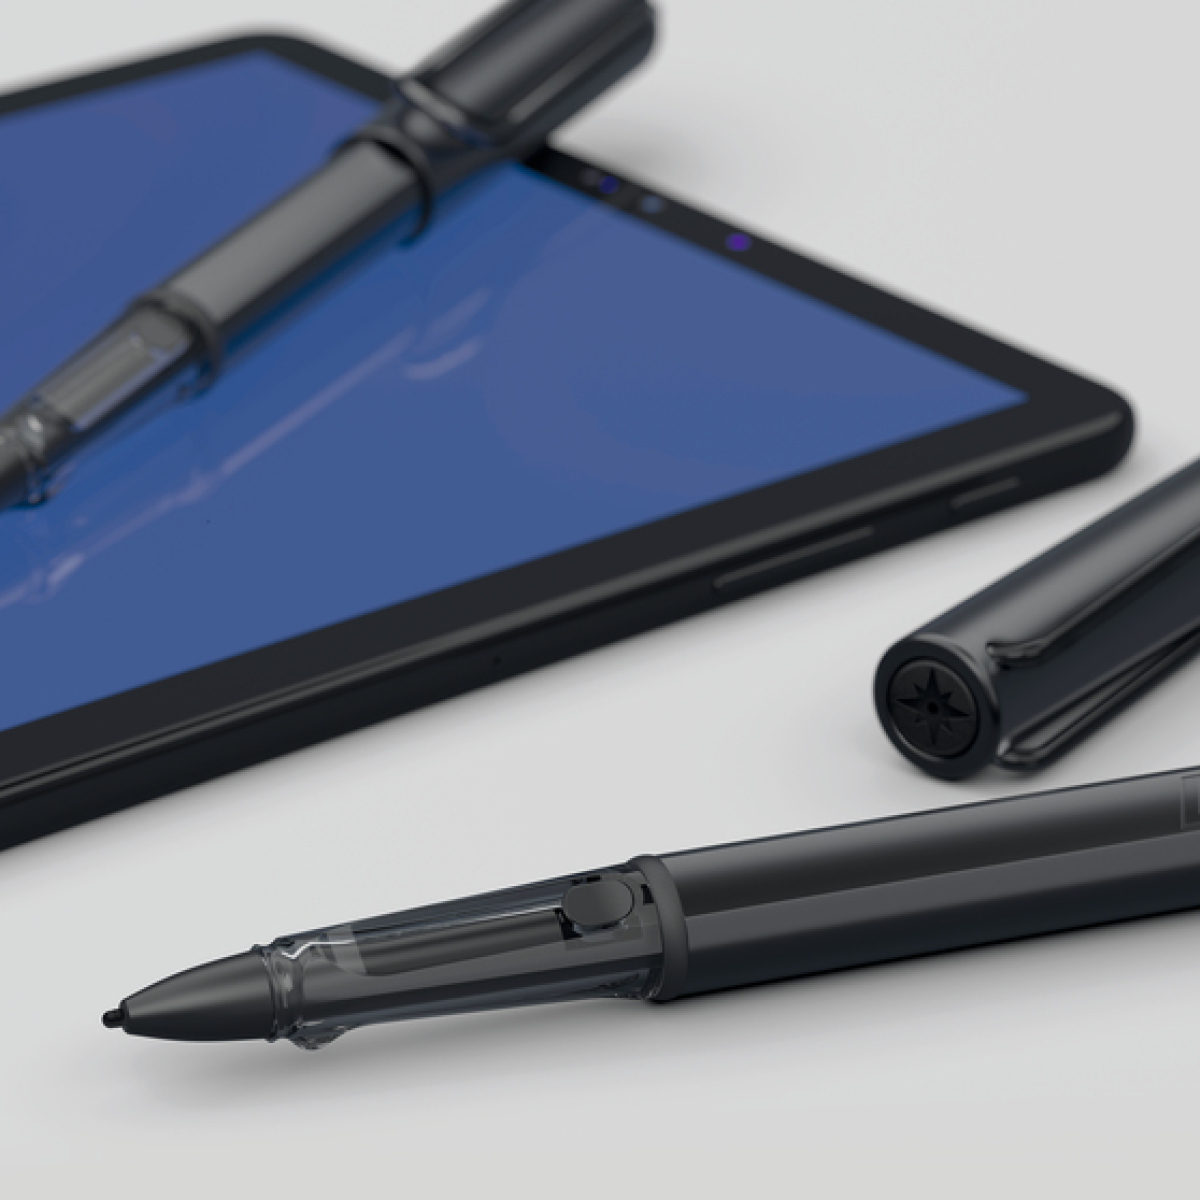 AL-star Black EMR POM - Digital Writing Pen  in the group Pens / Fine Writing / Engraving at Pen Store (102121)